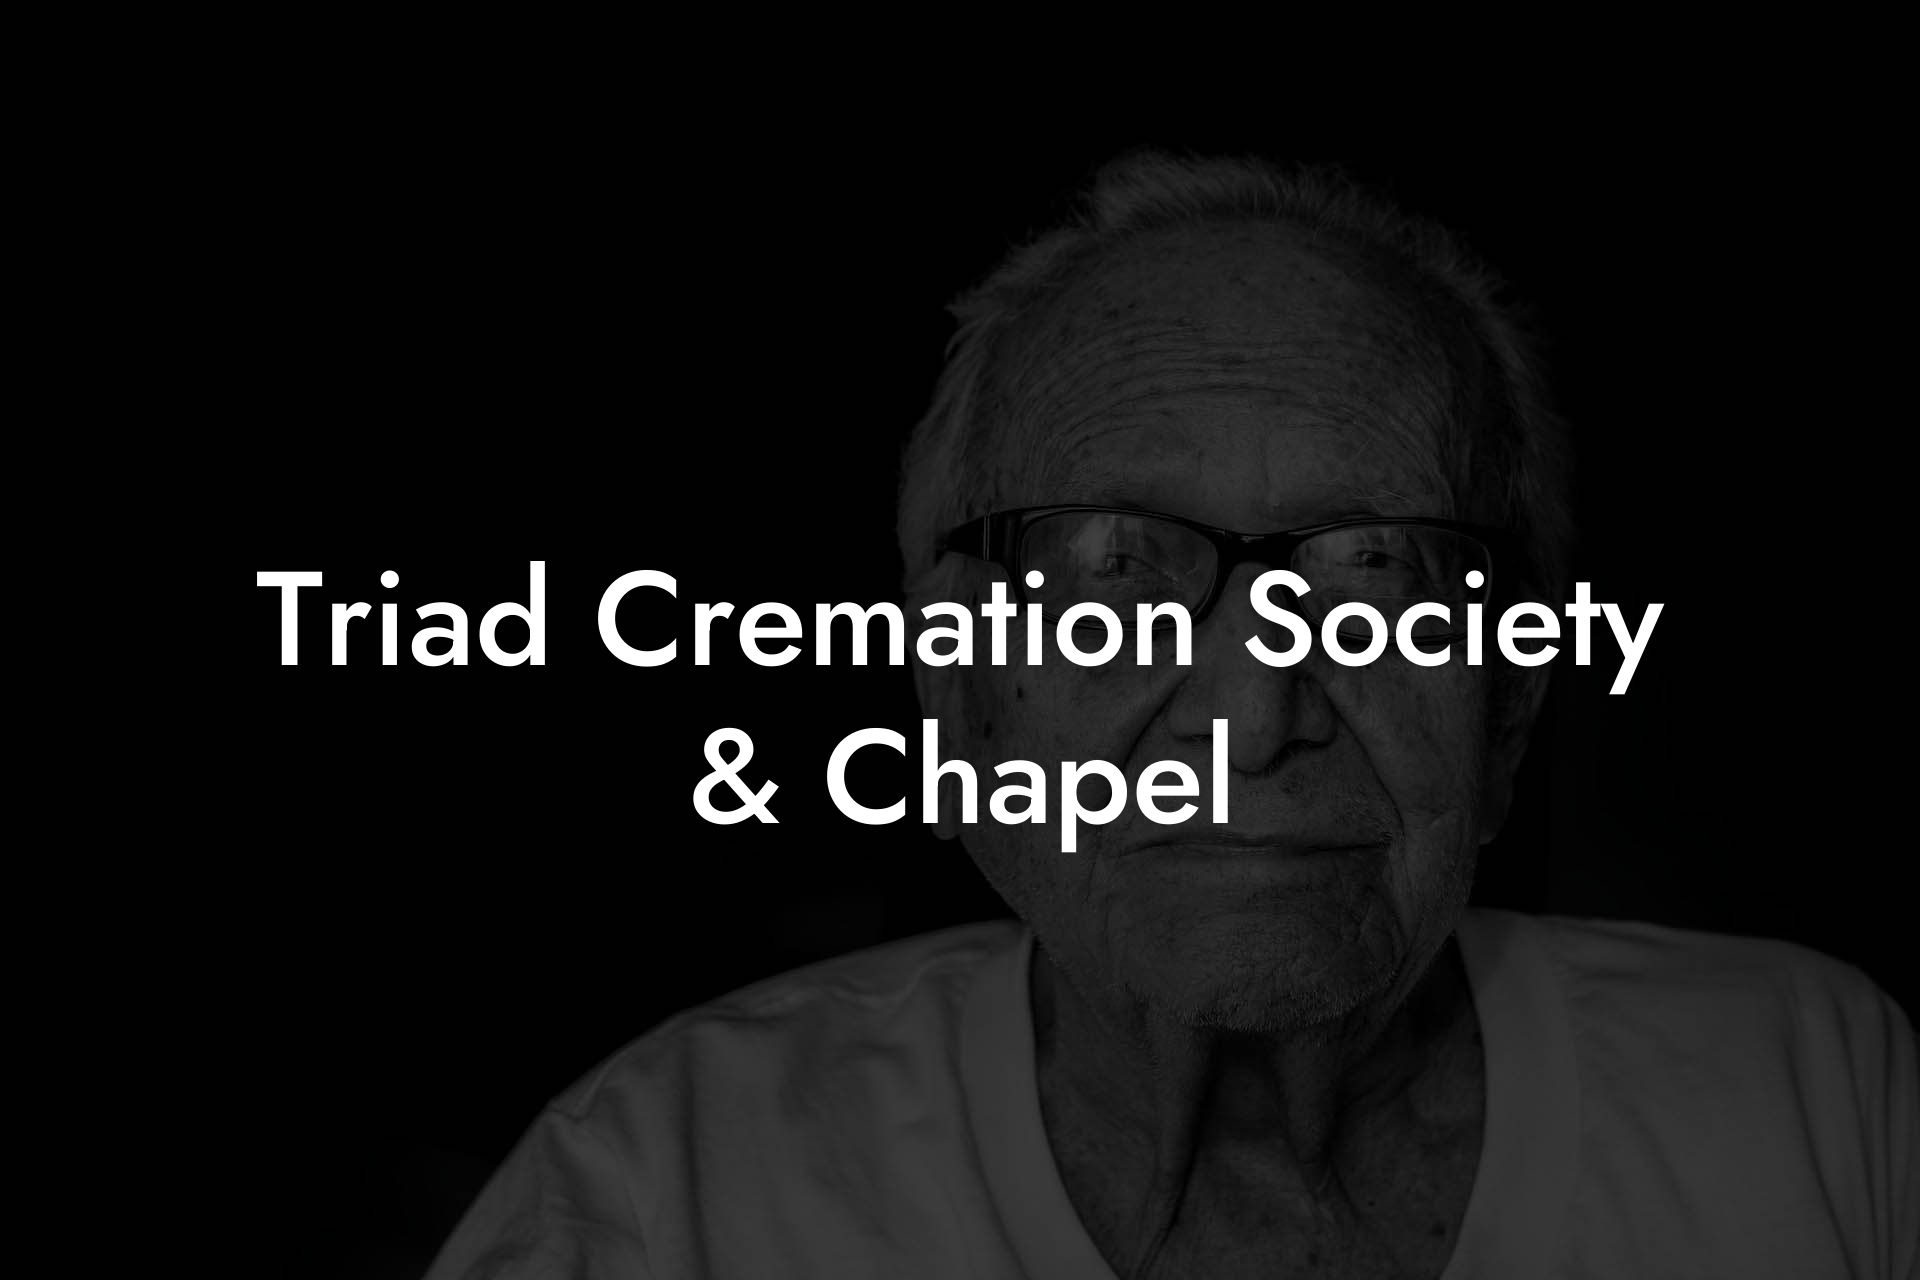 Triad Cremation Society & Chapel